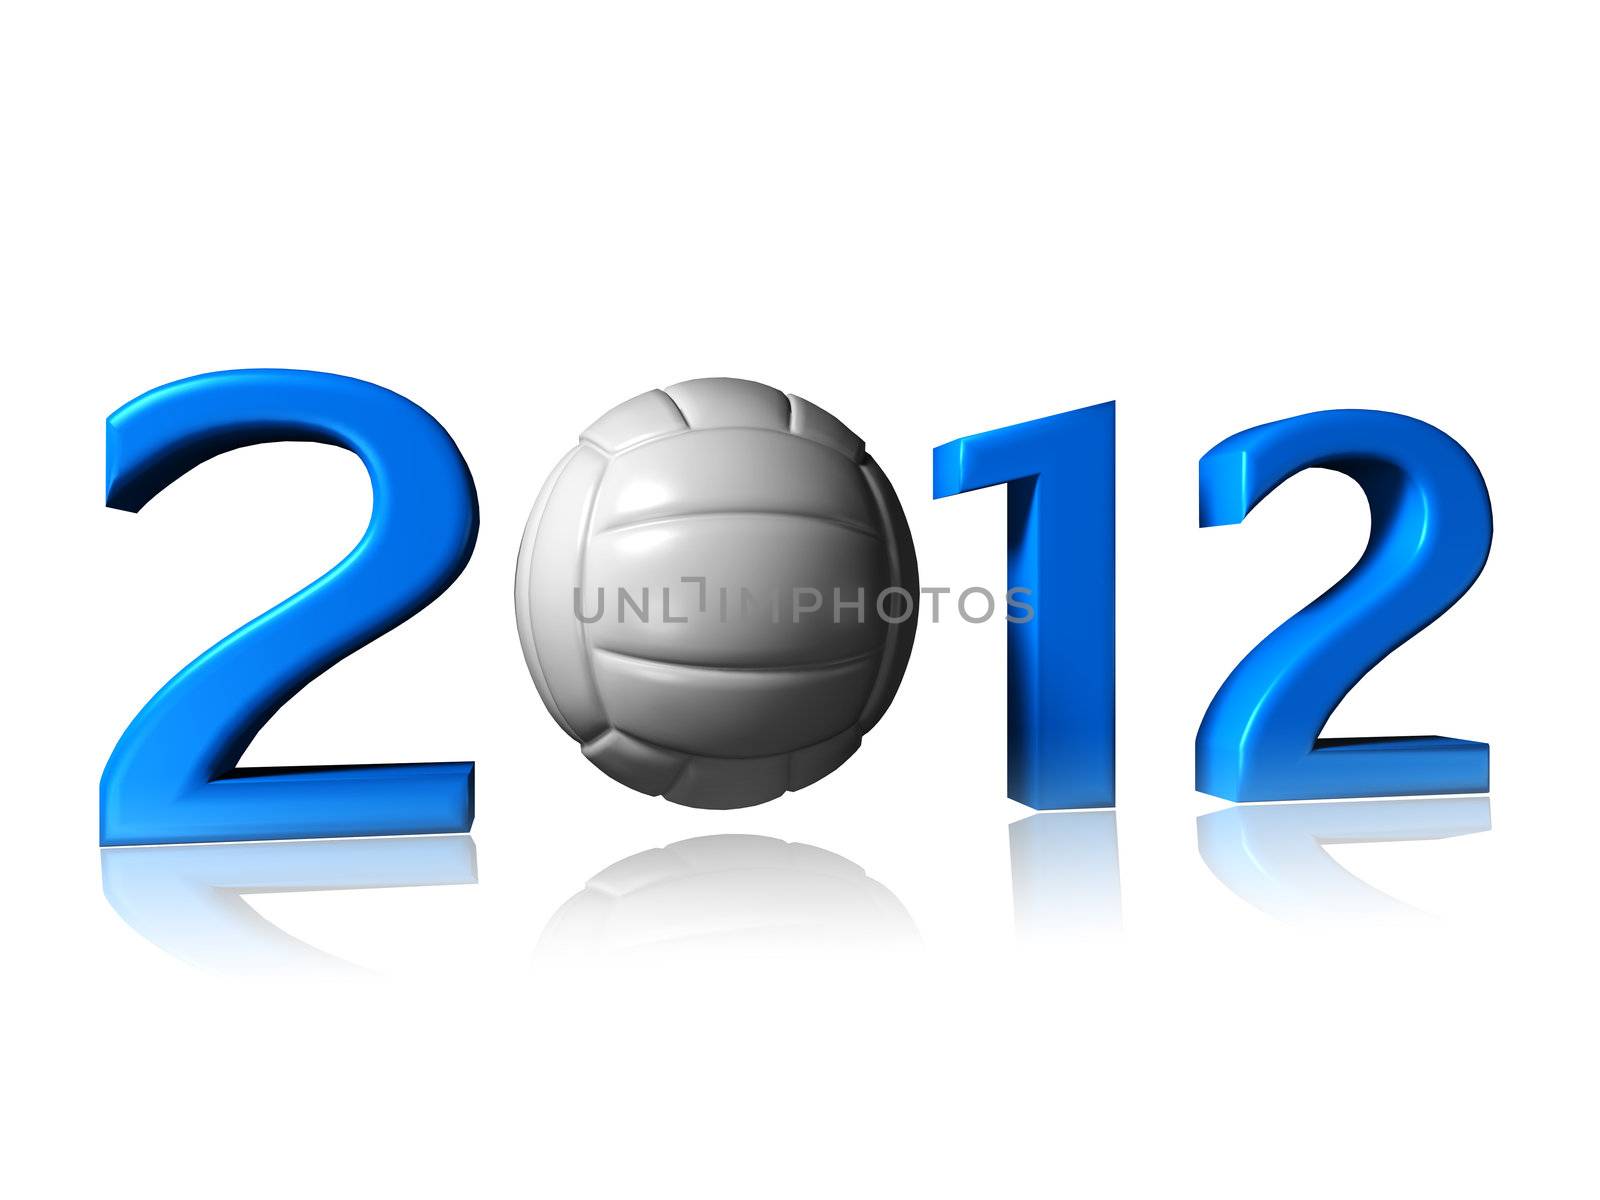 Big 2012 volleyball logo by shkyo30